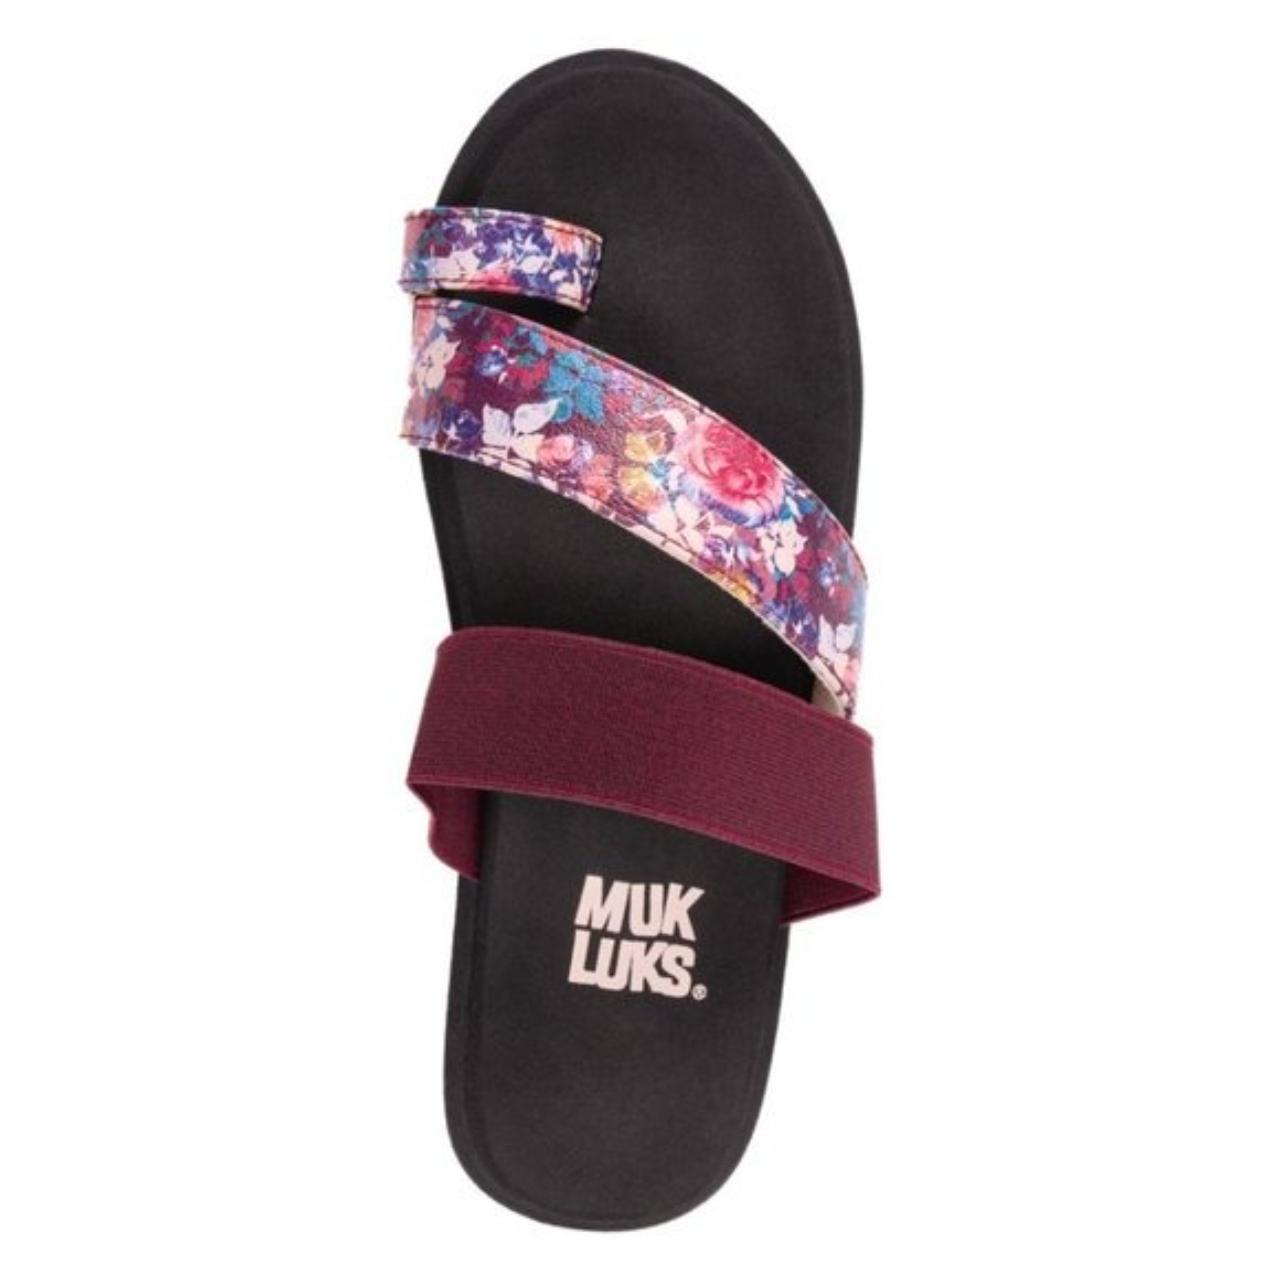 Muk Luks Women's Sandals (2)